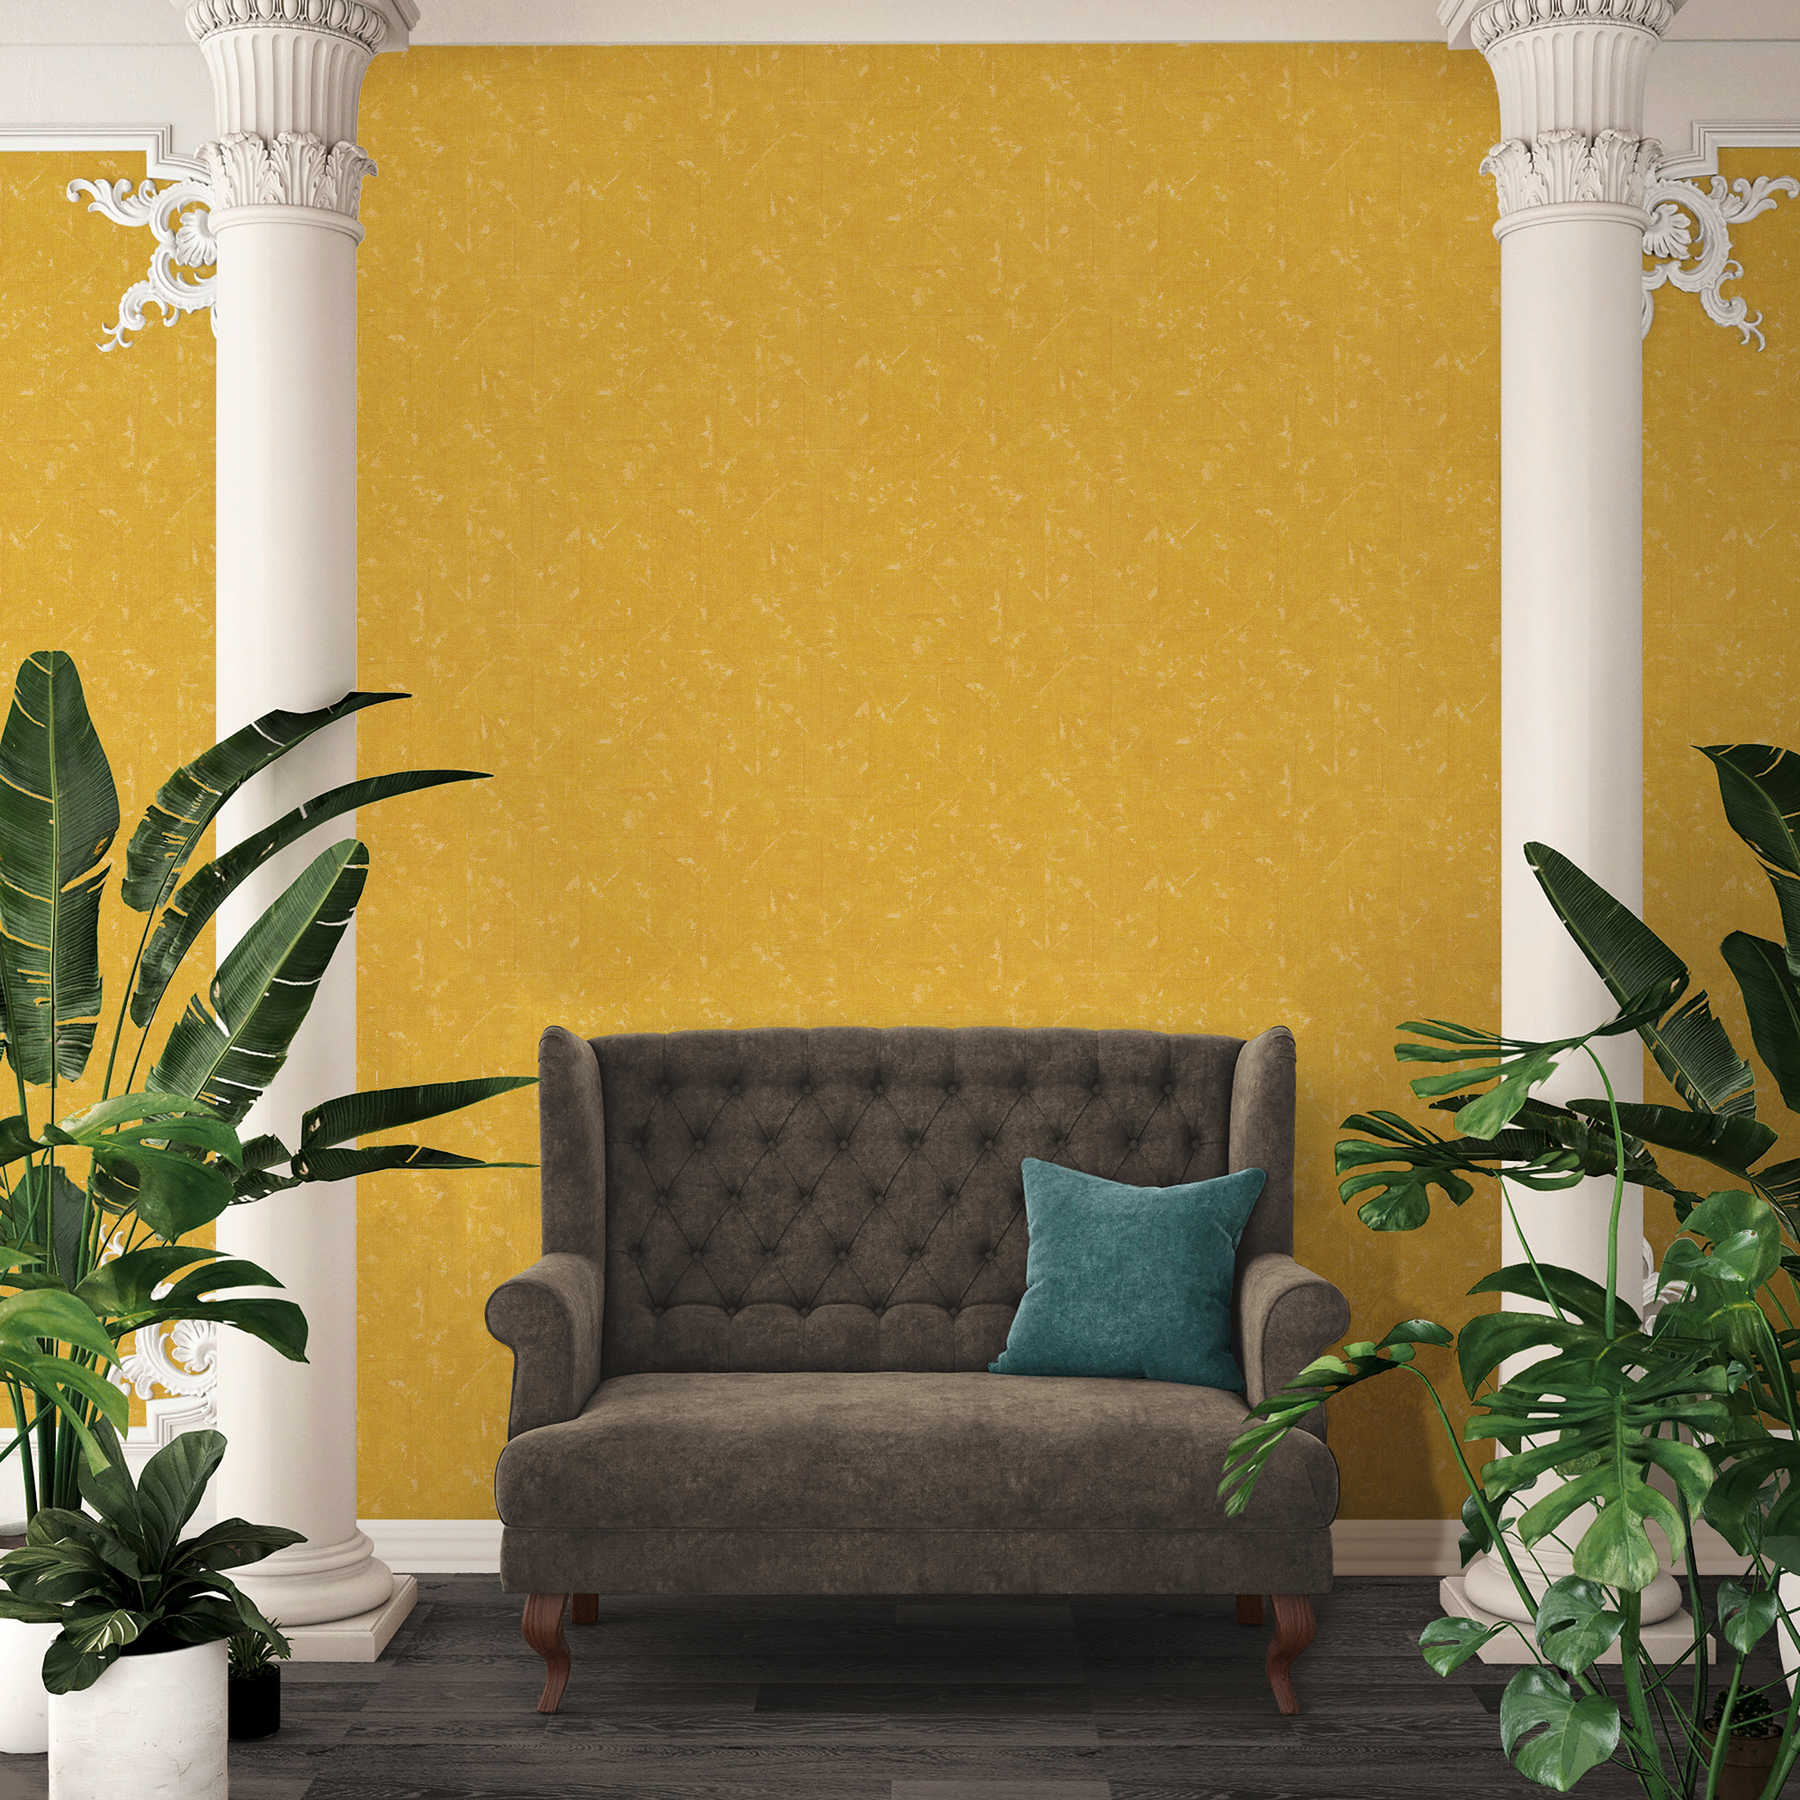             Behang zomer geel, asymmetrisch patroon - Geel
        